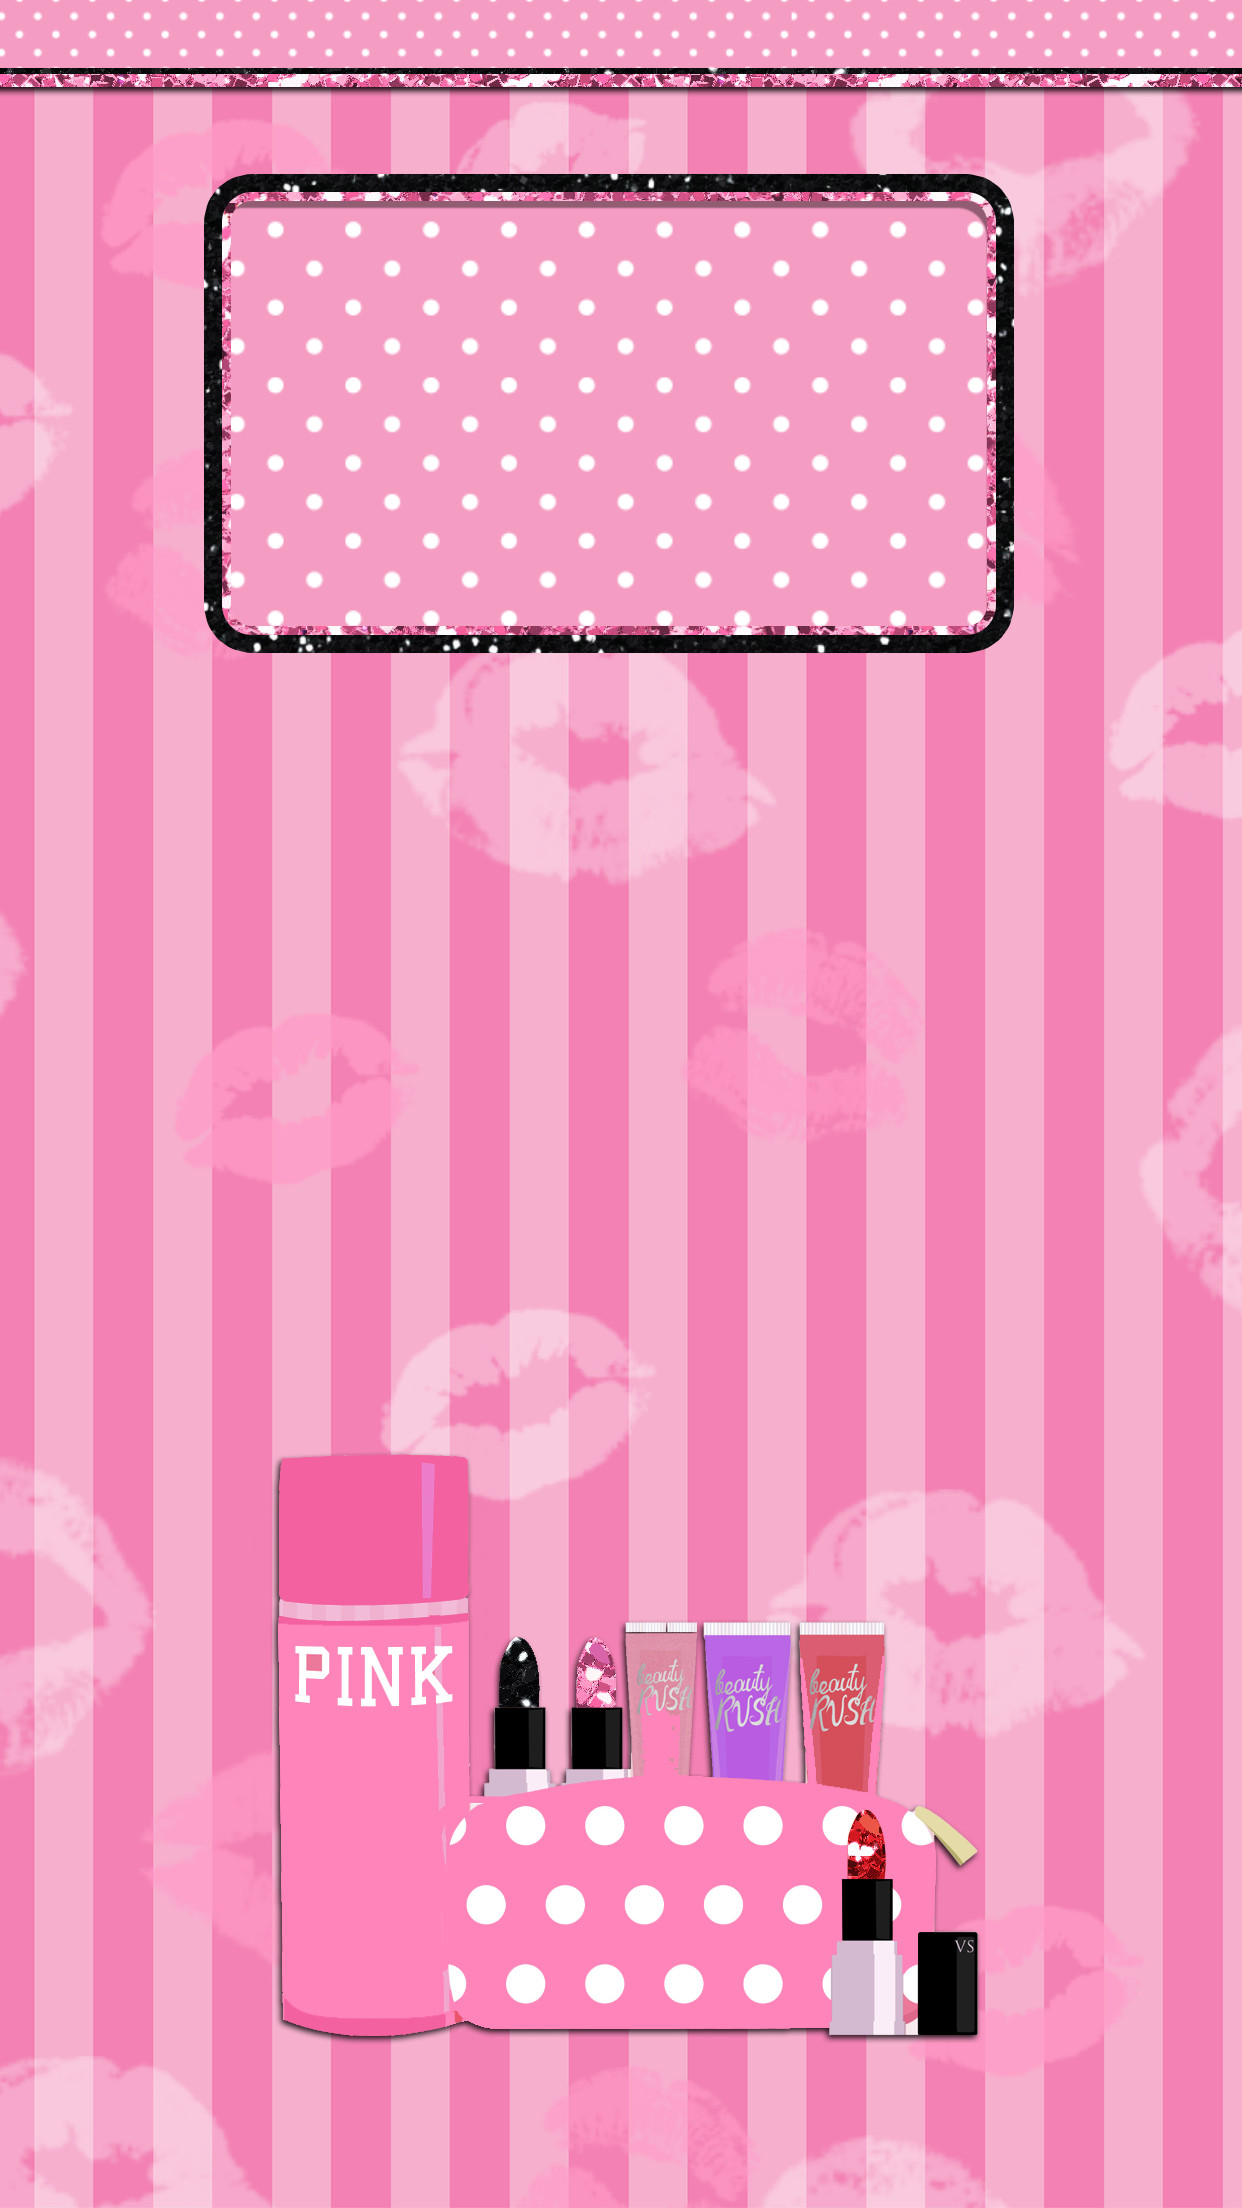 Victorias Secret Iphone Wallpapers